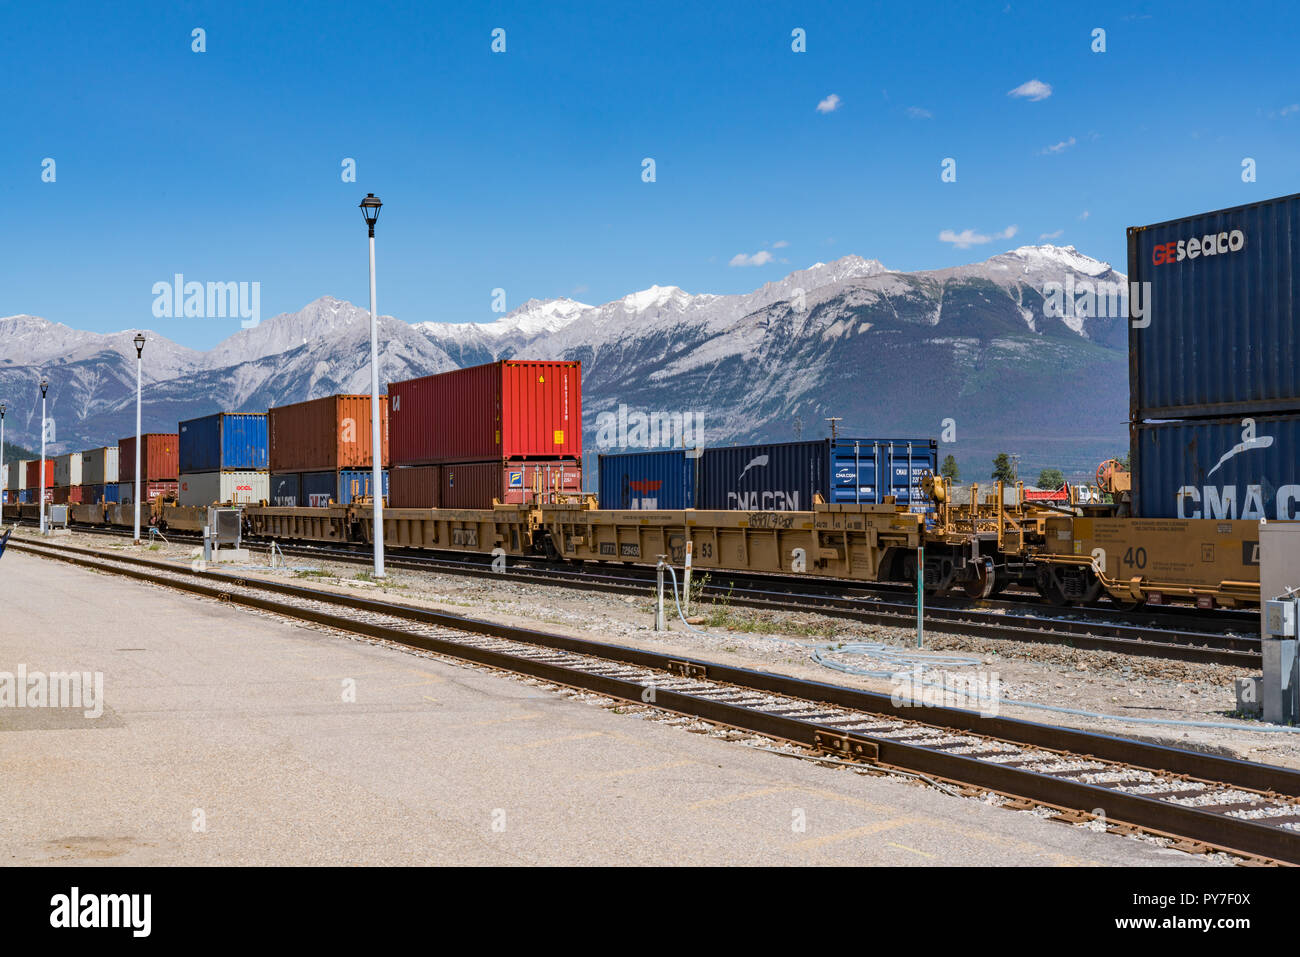 JASPER, CANADA - JULY 5, 2018: Railroad freight containers await departure in the rail depot in Jasper, Alberta Stock Photo